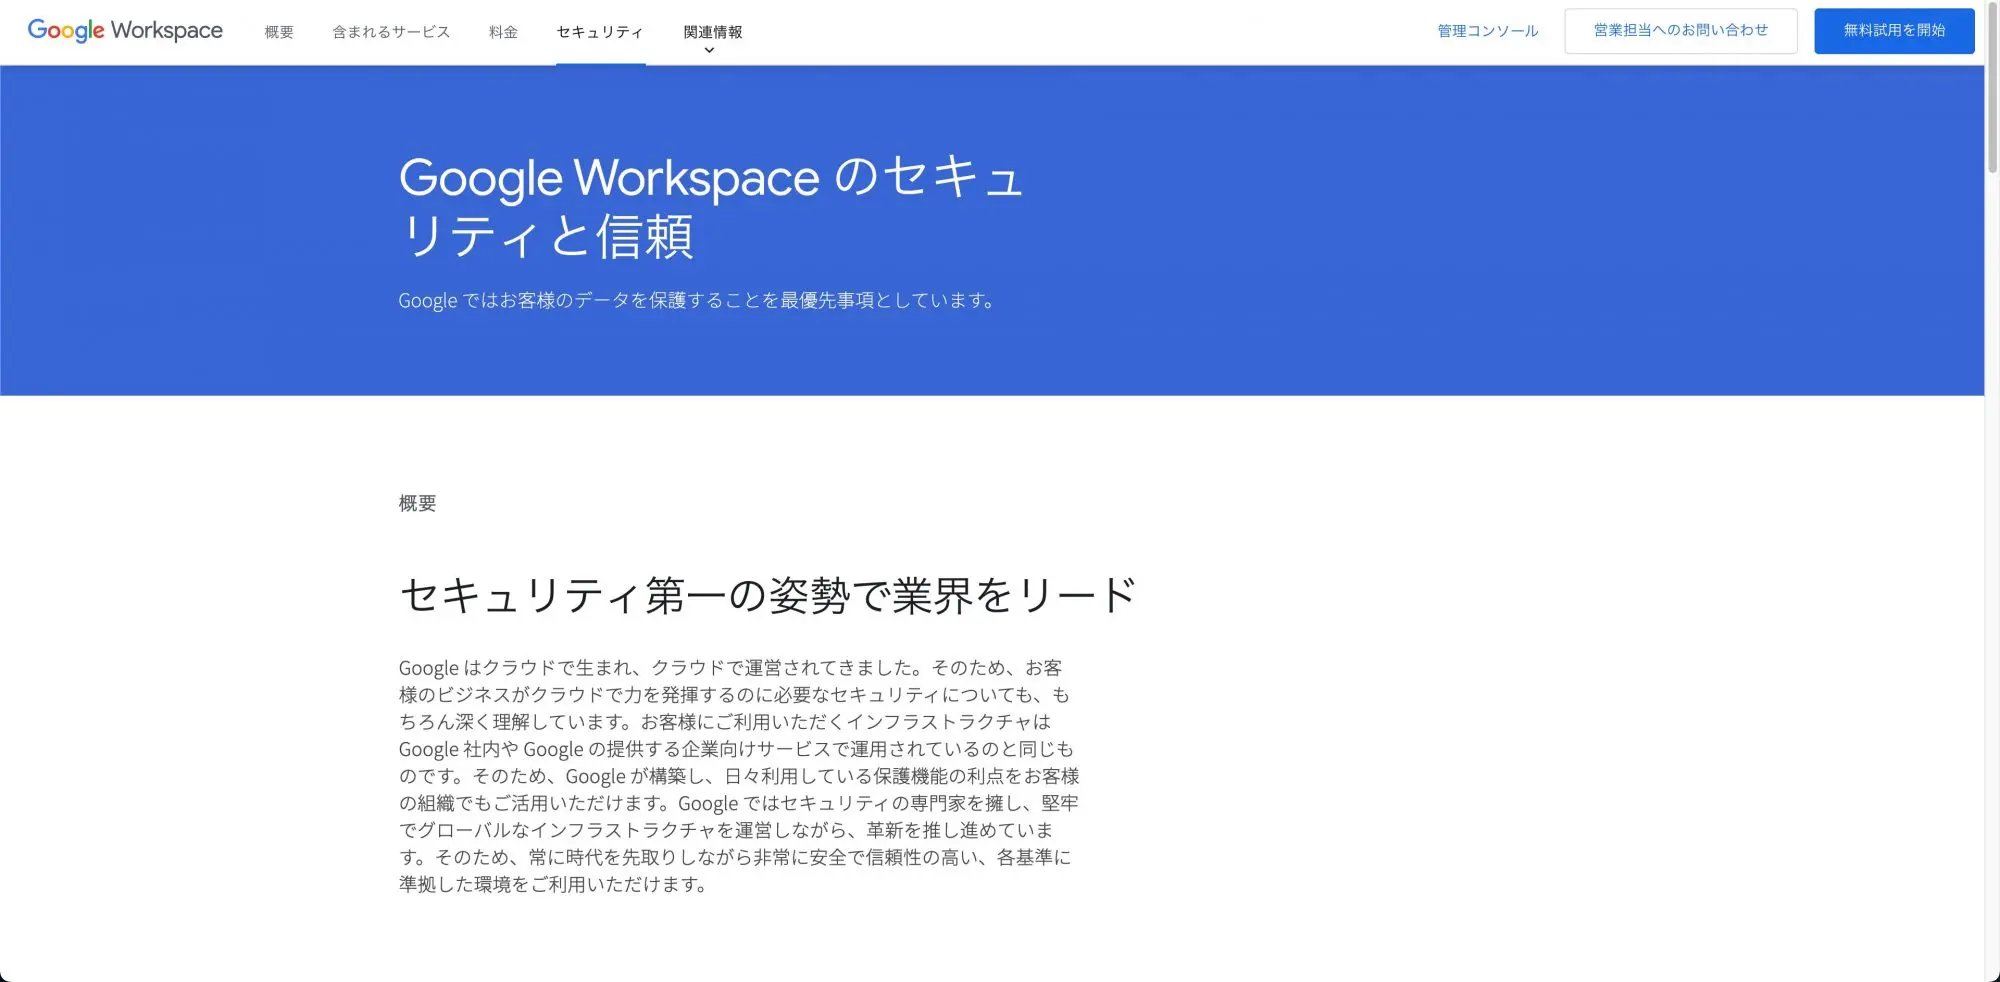 Google Workspace のセキュリティと信頼